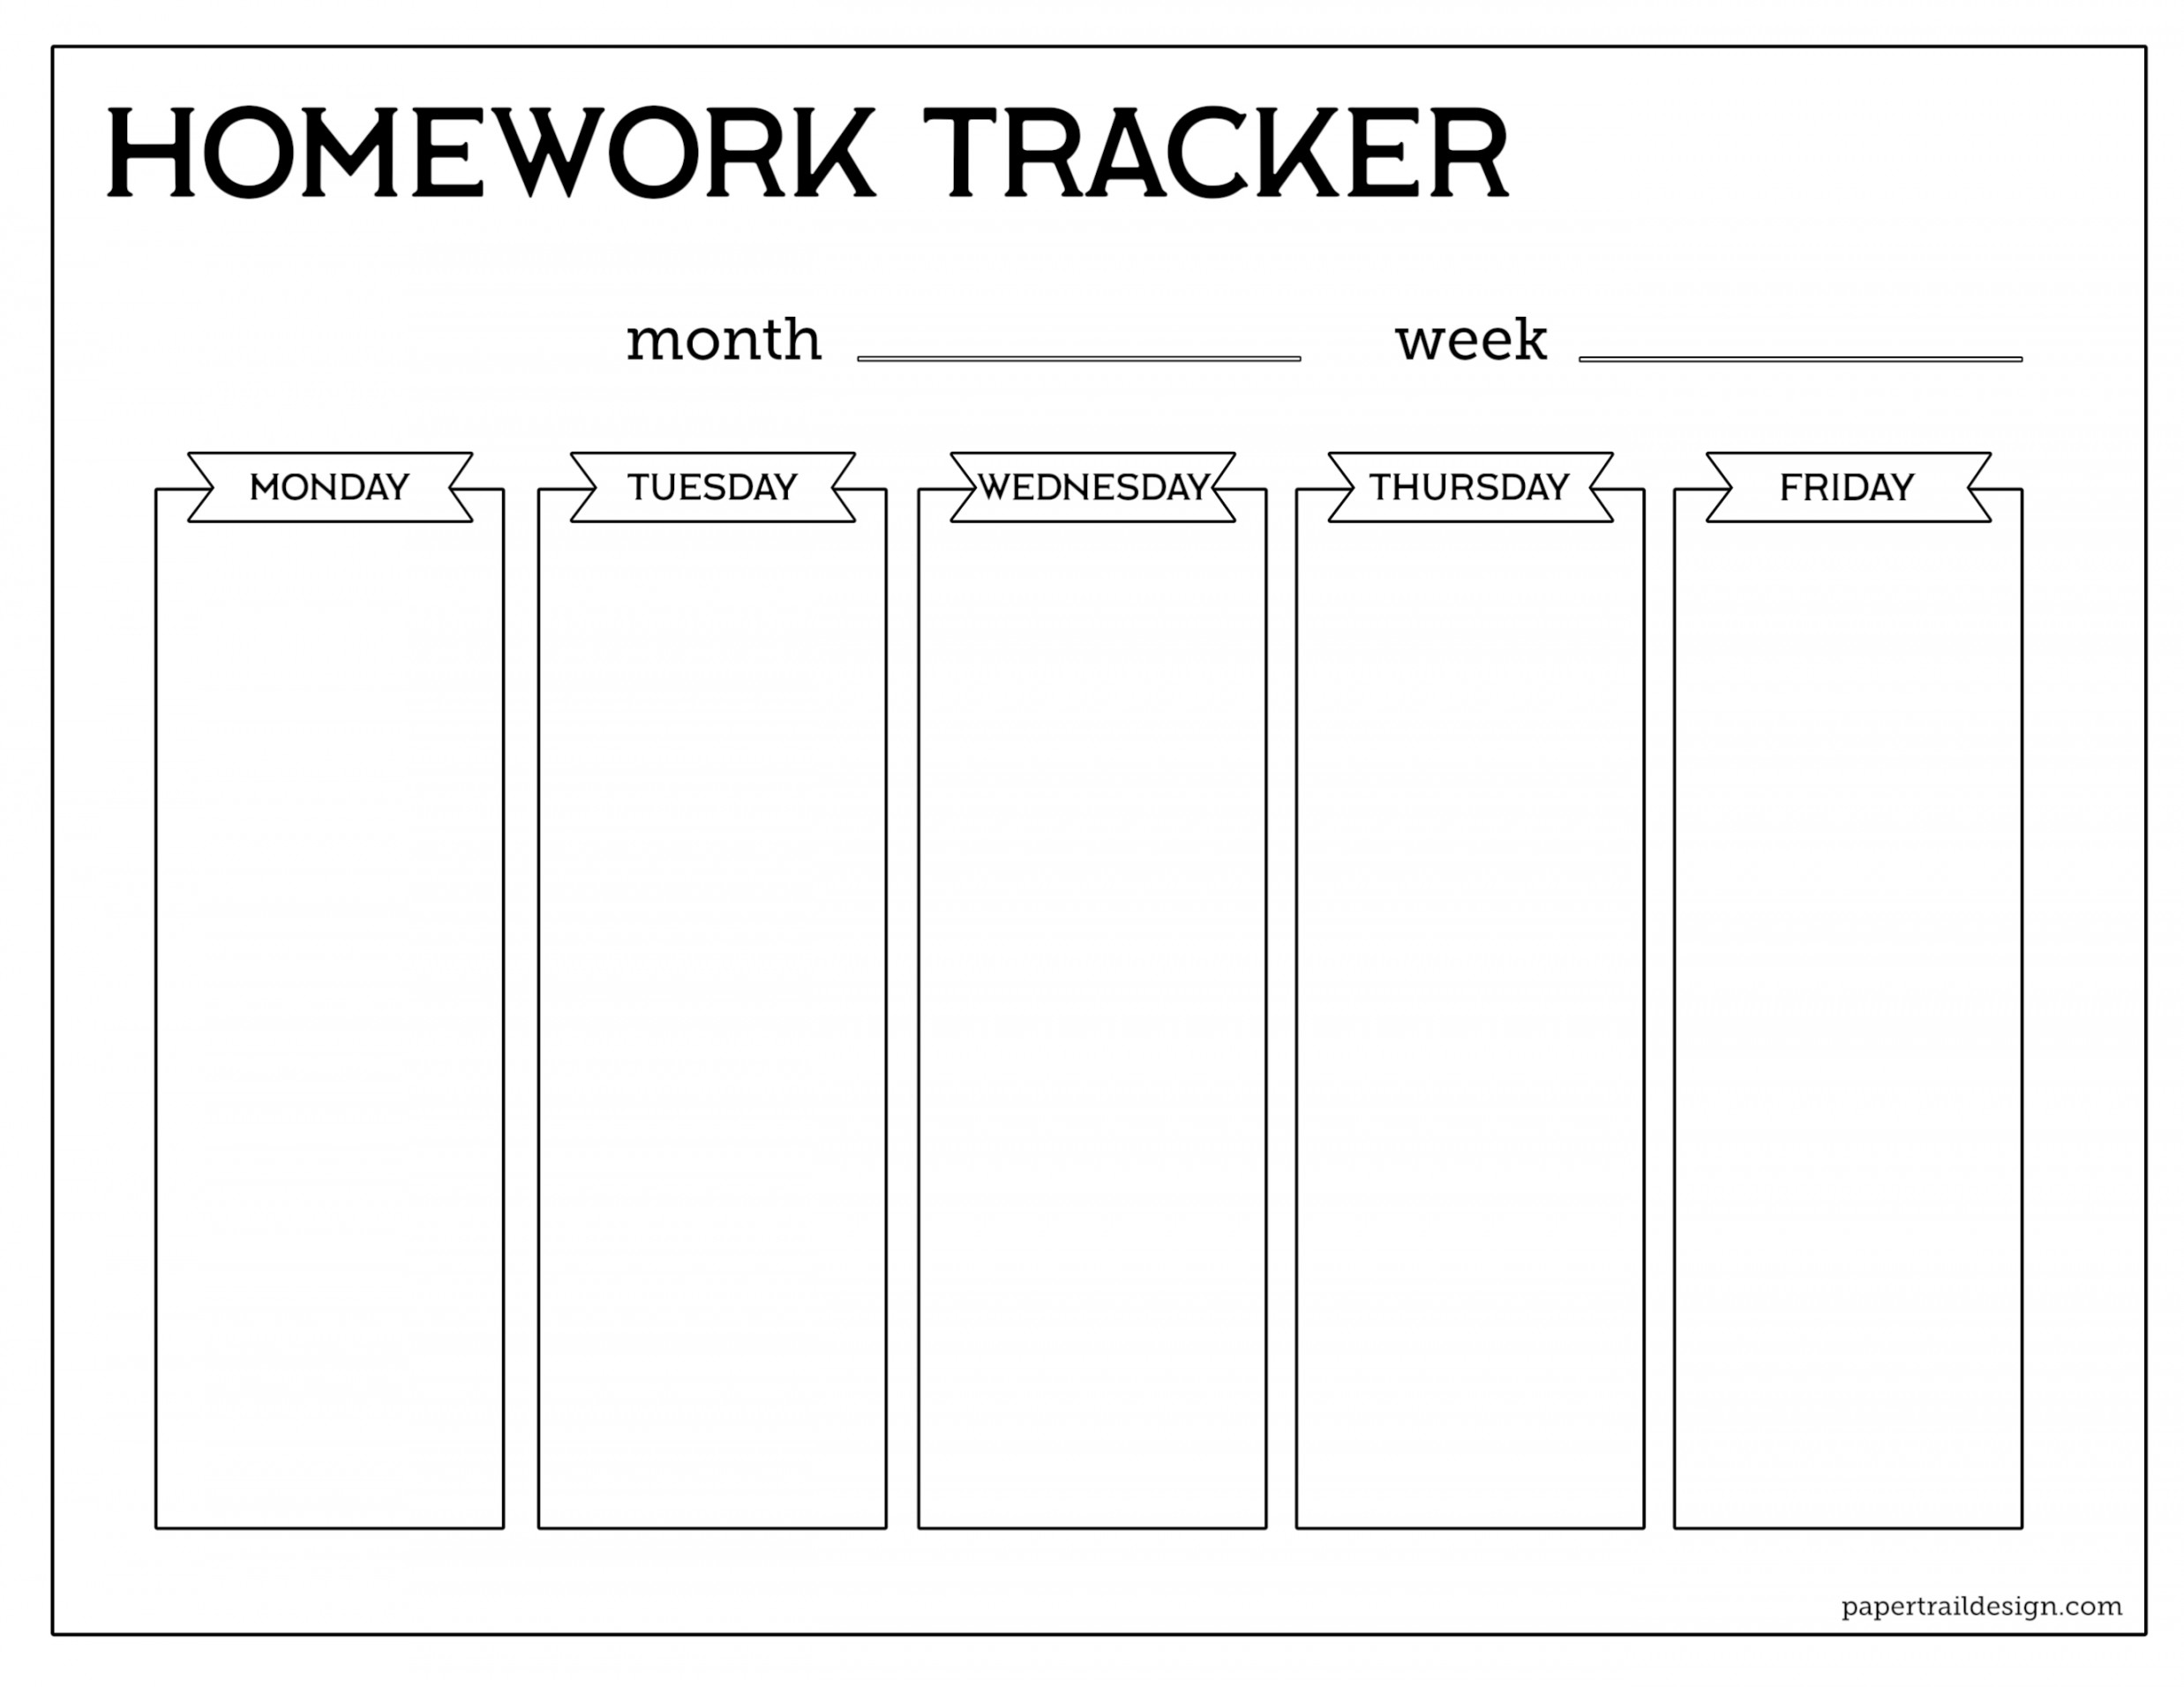 Free Printable Student Homework Planner Template - Paper Trail Design